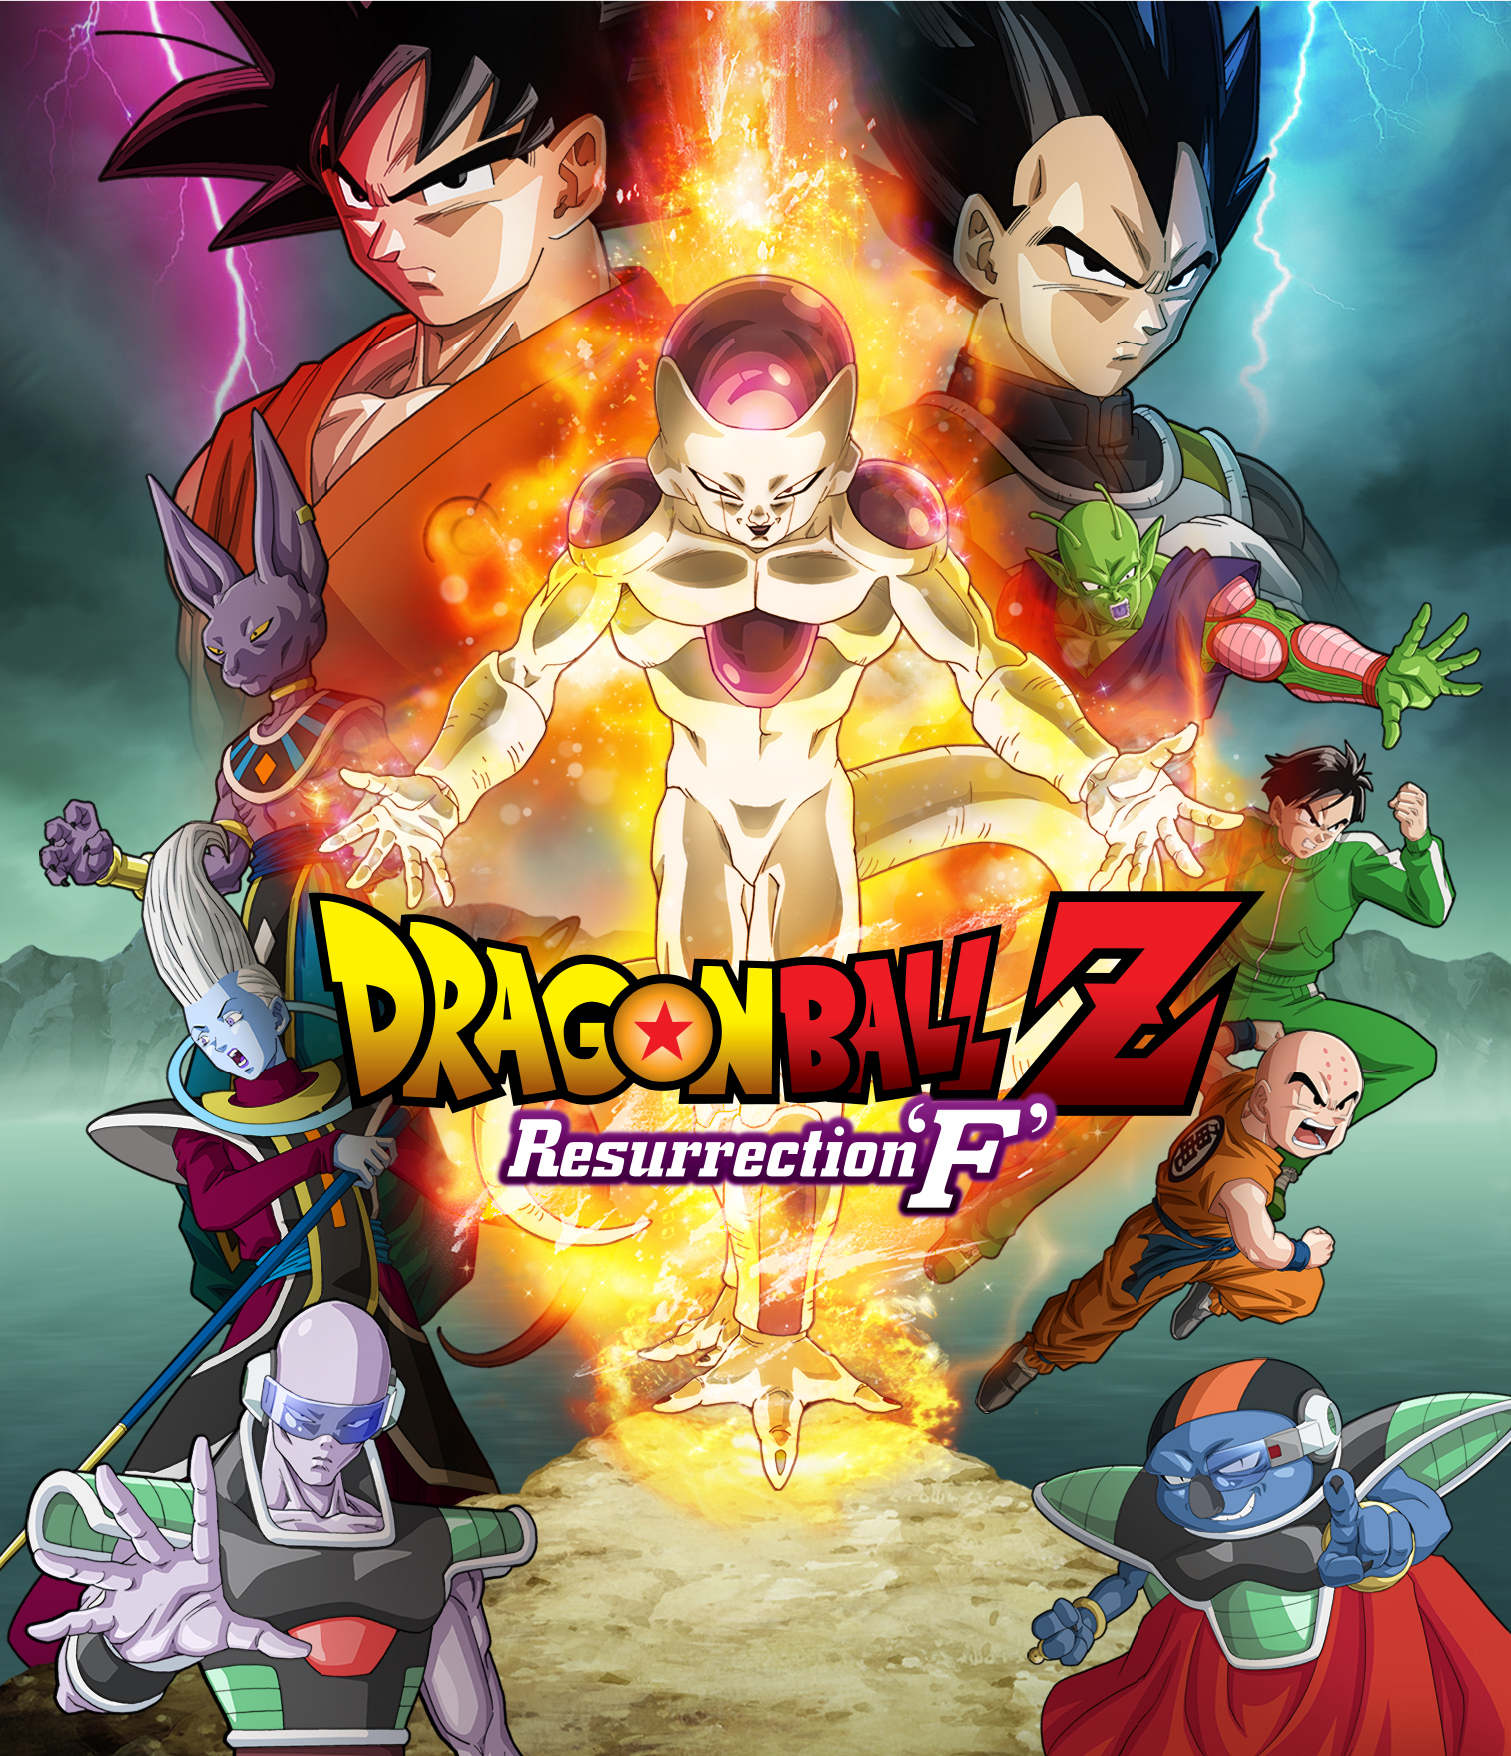 Dragon Ball Z: Resurrection 'F' [Blu-ray] [2015] - Best Buy